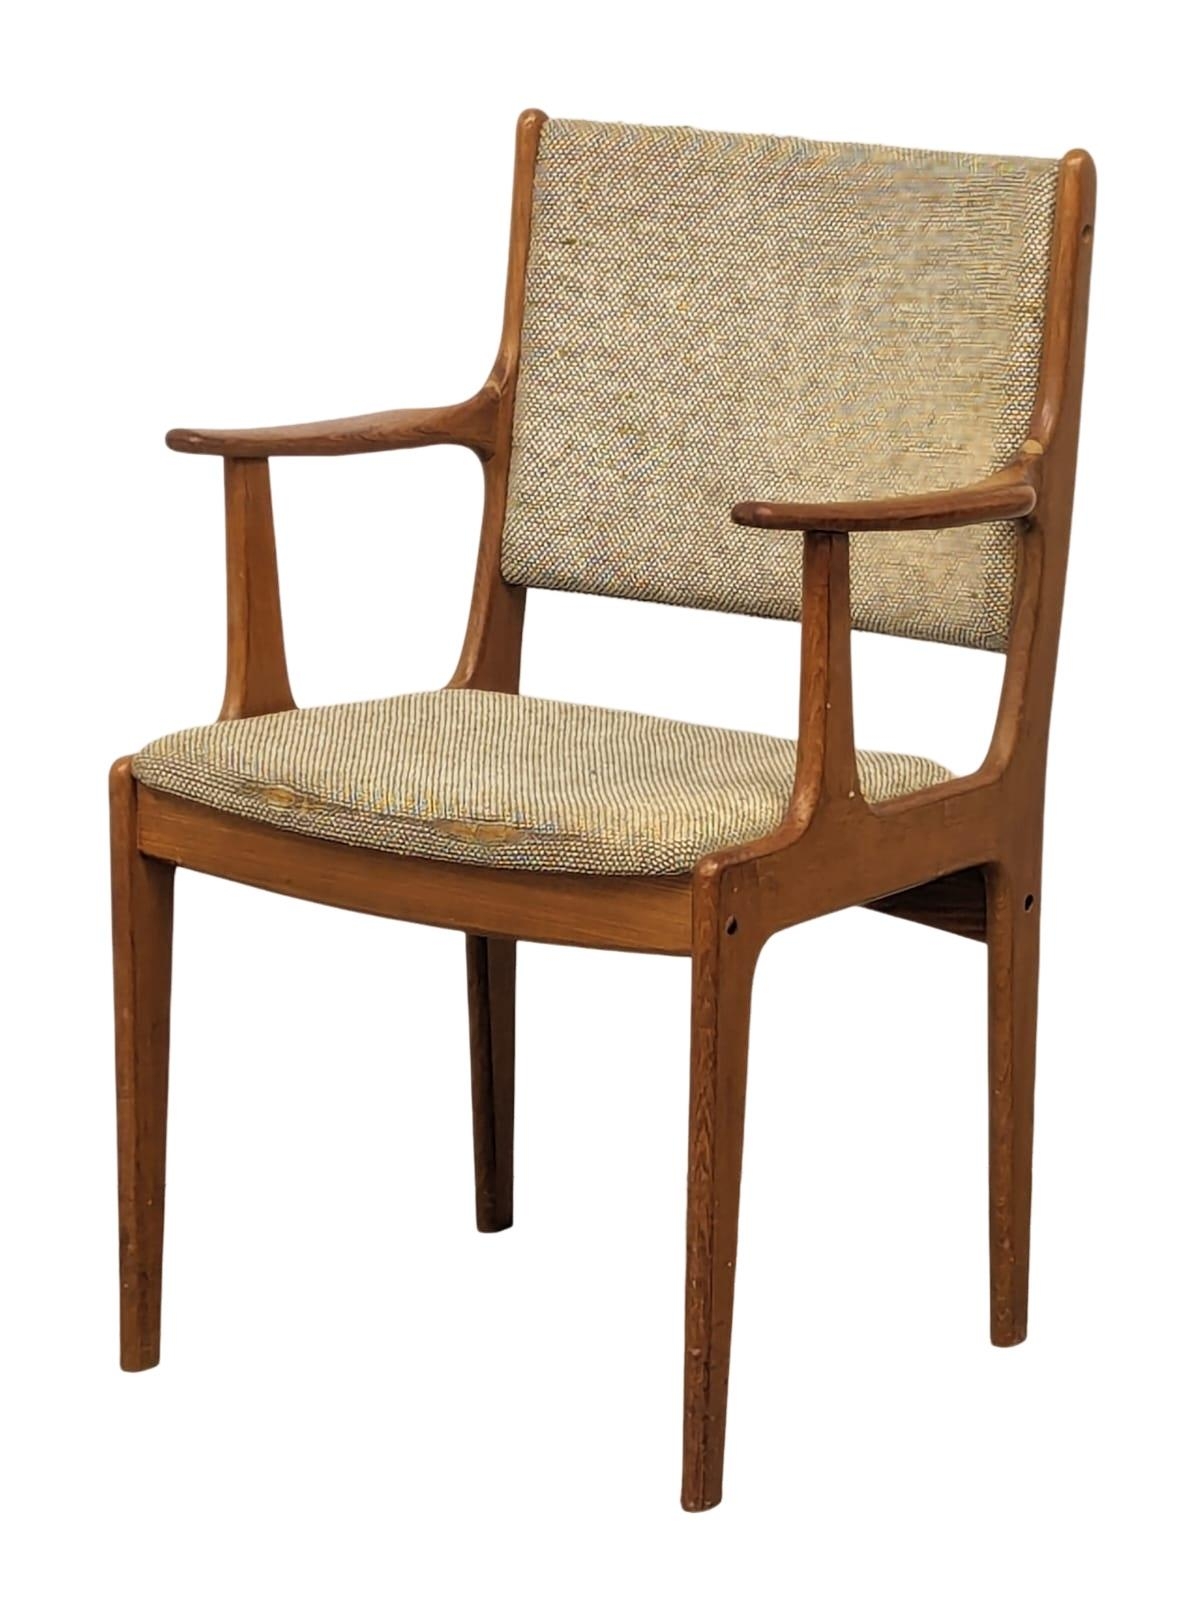 A Danish Mid Century teak armchair designed by Johannes Andersen.